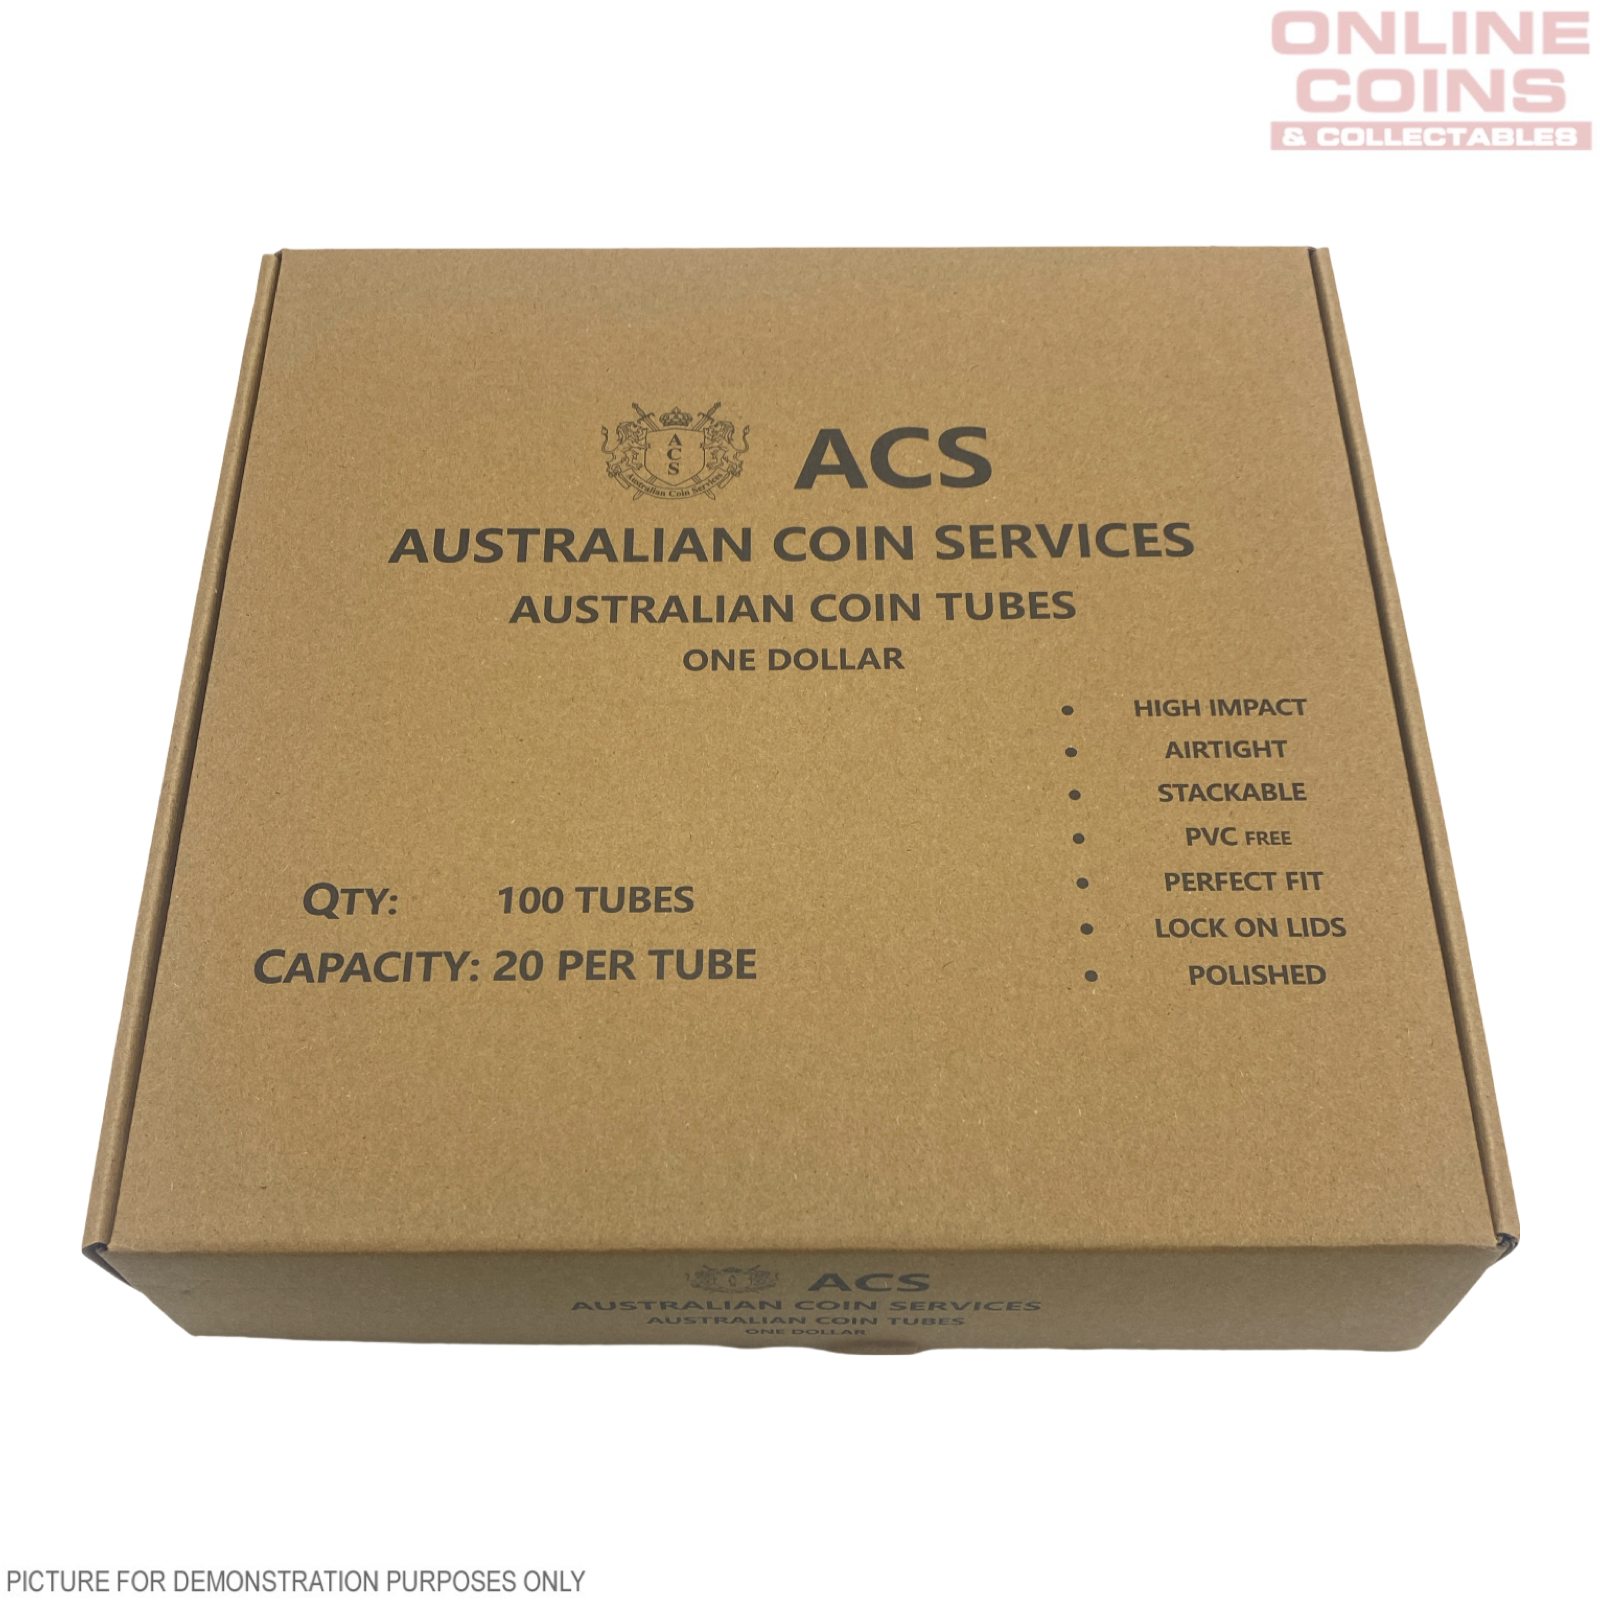 BULK BUY - Coin Tube for Australian $1 Coins - Stackable, PVC Free, Airtight - CASE OF 100